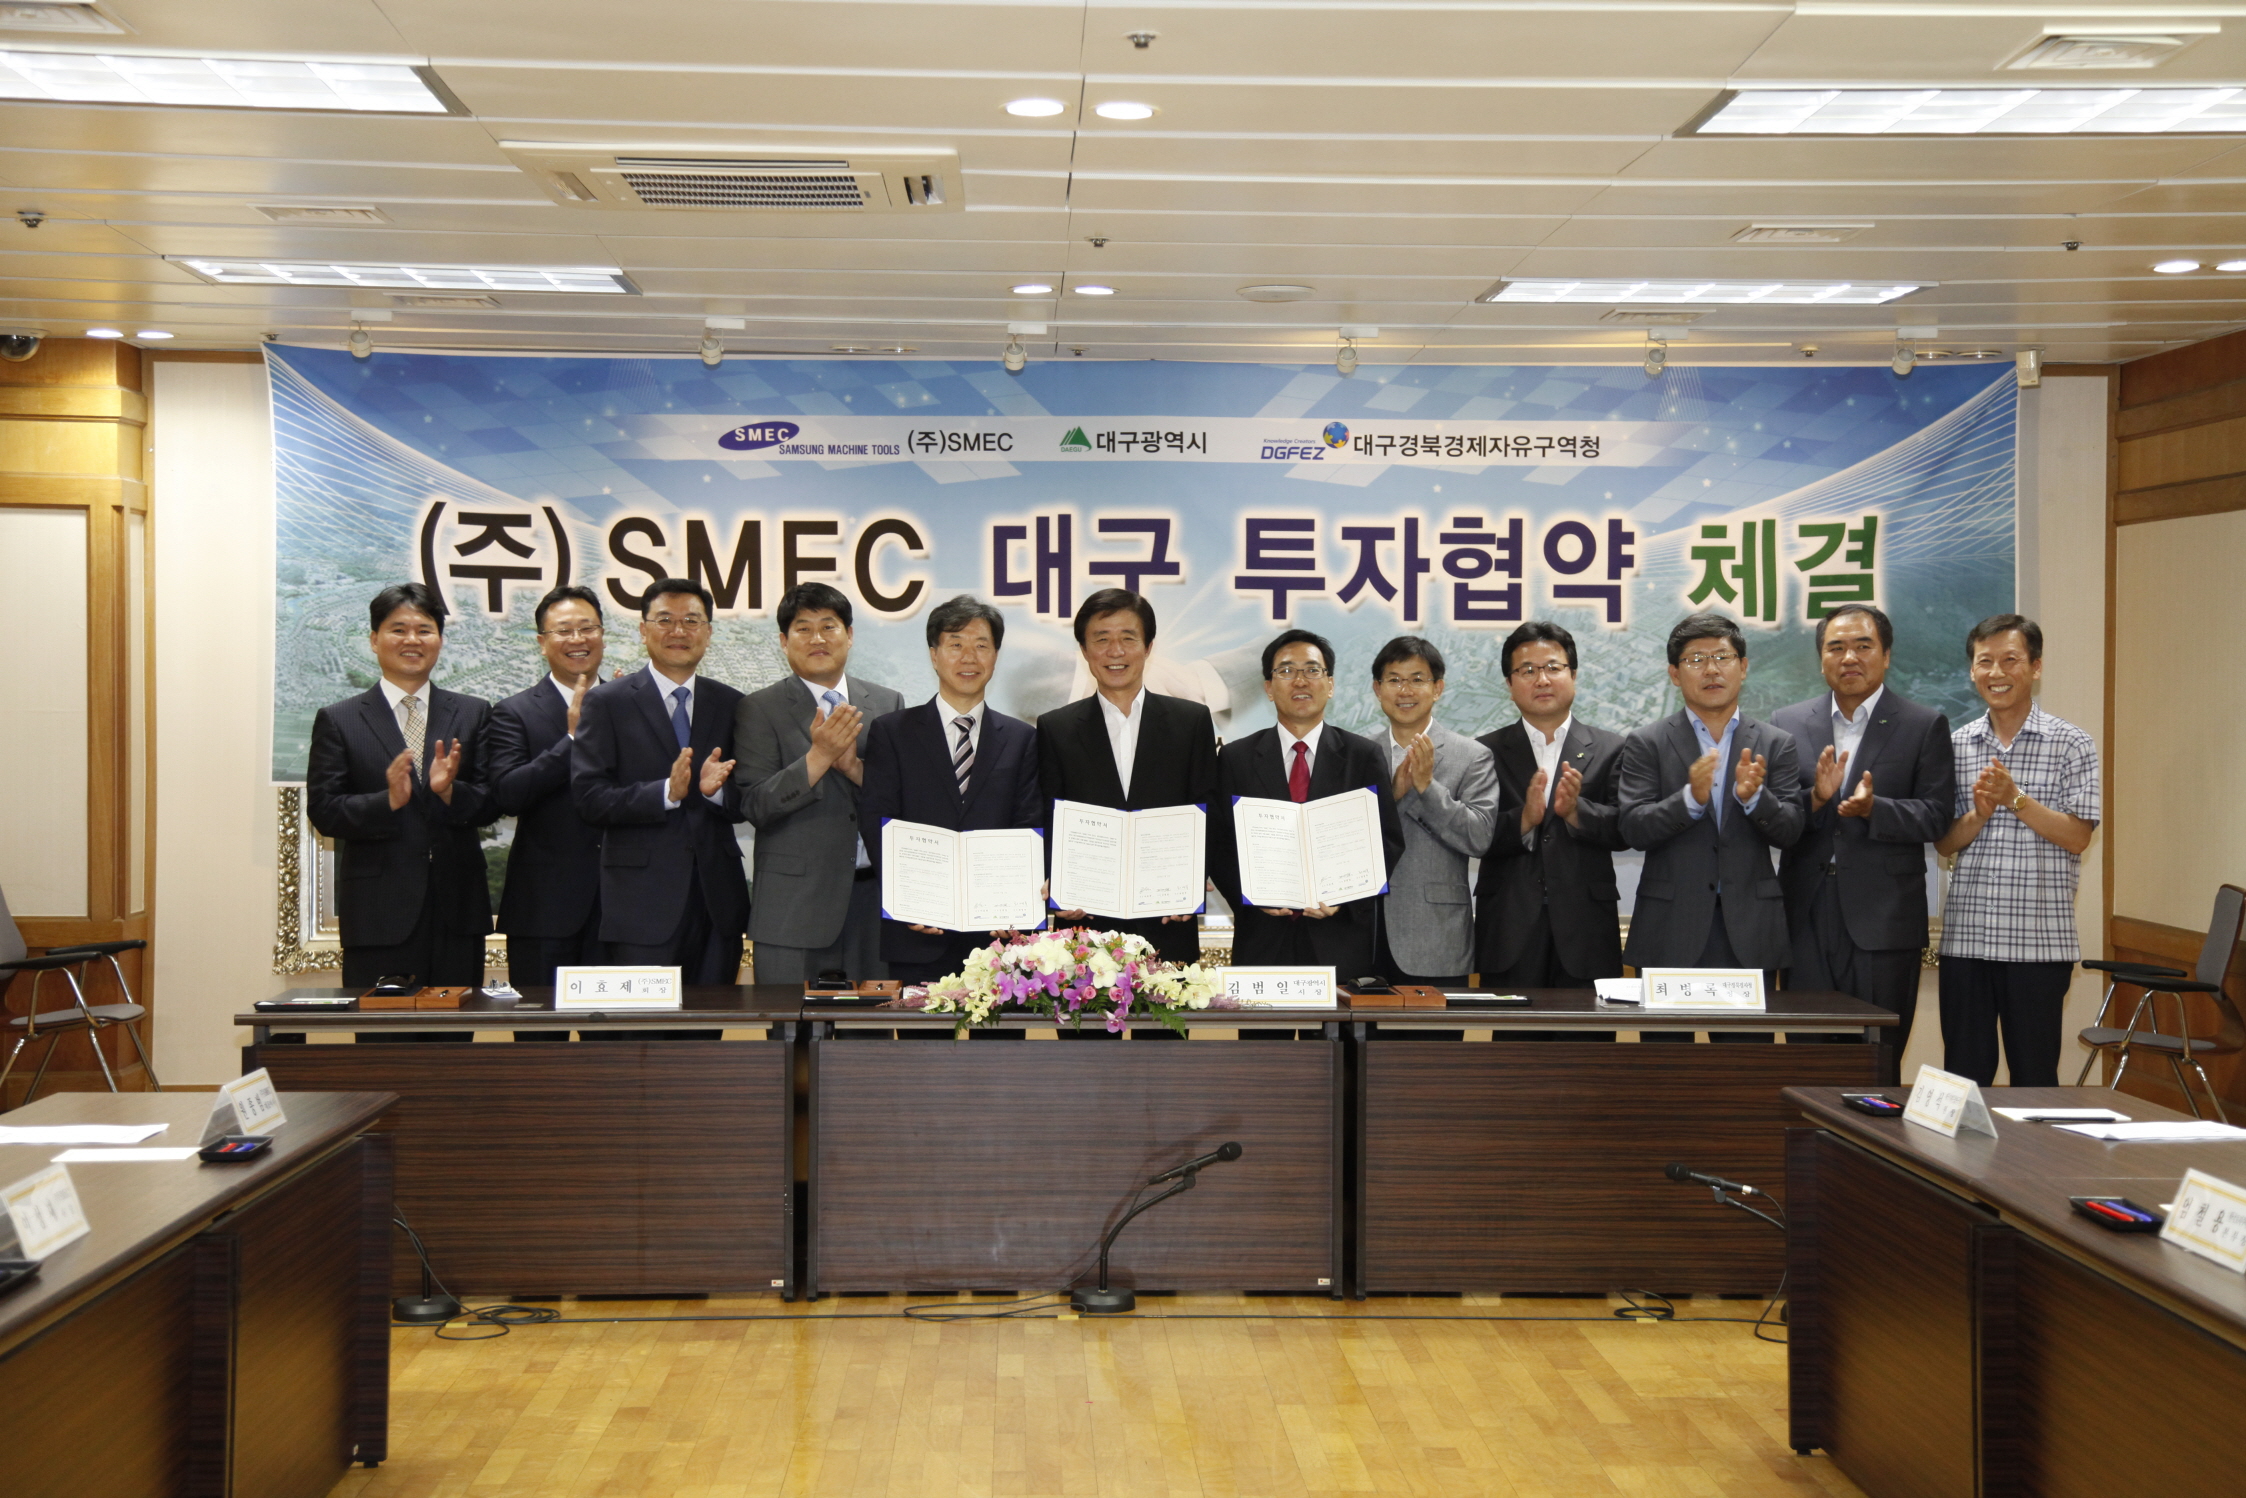 DGFEZ and Daegu Metropolitan City signed an MOU with SMEC